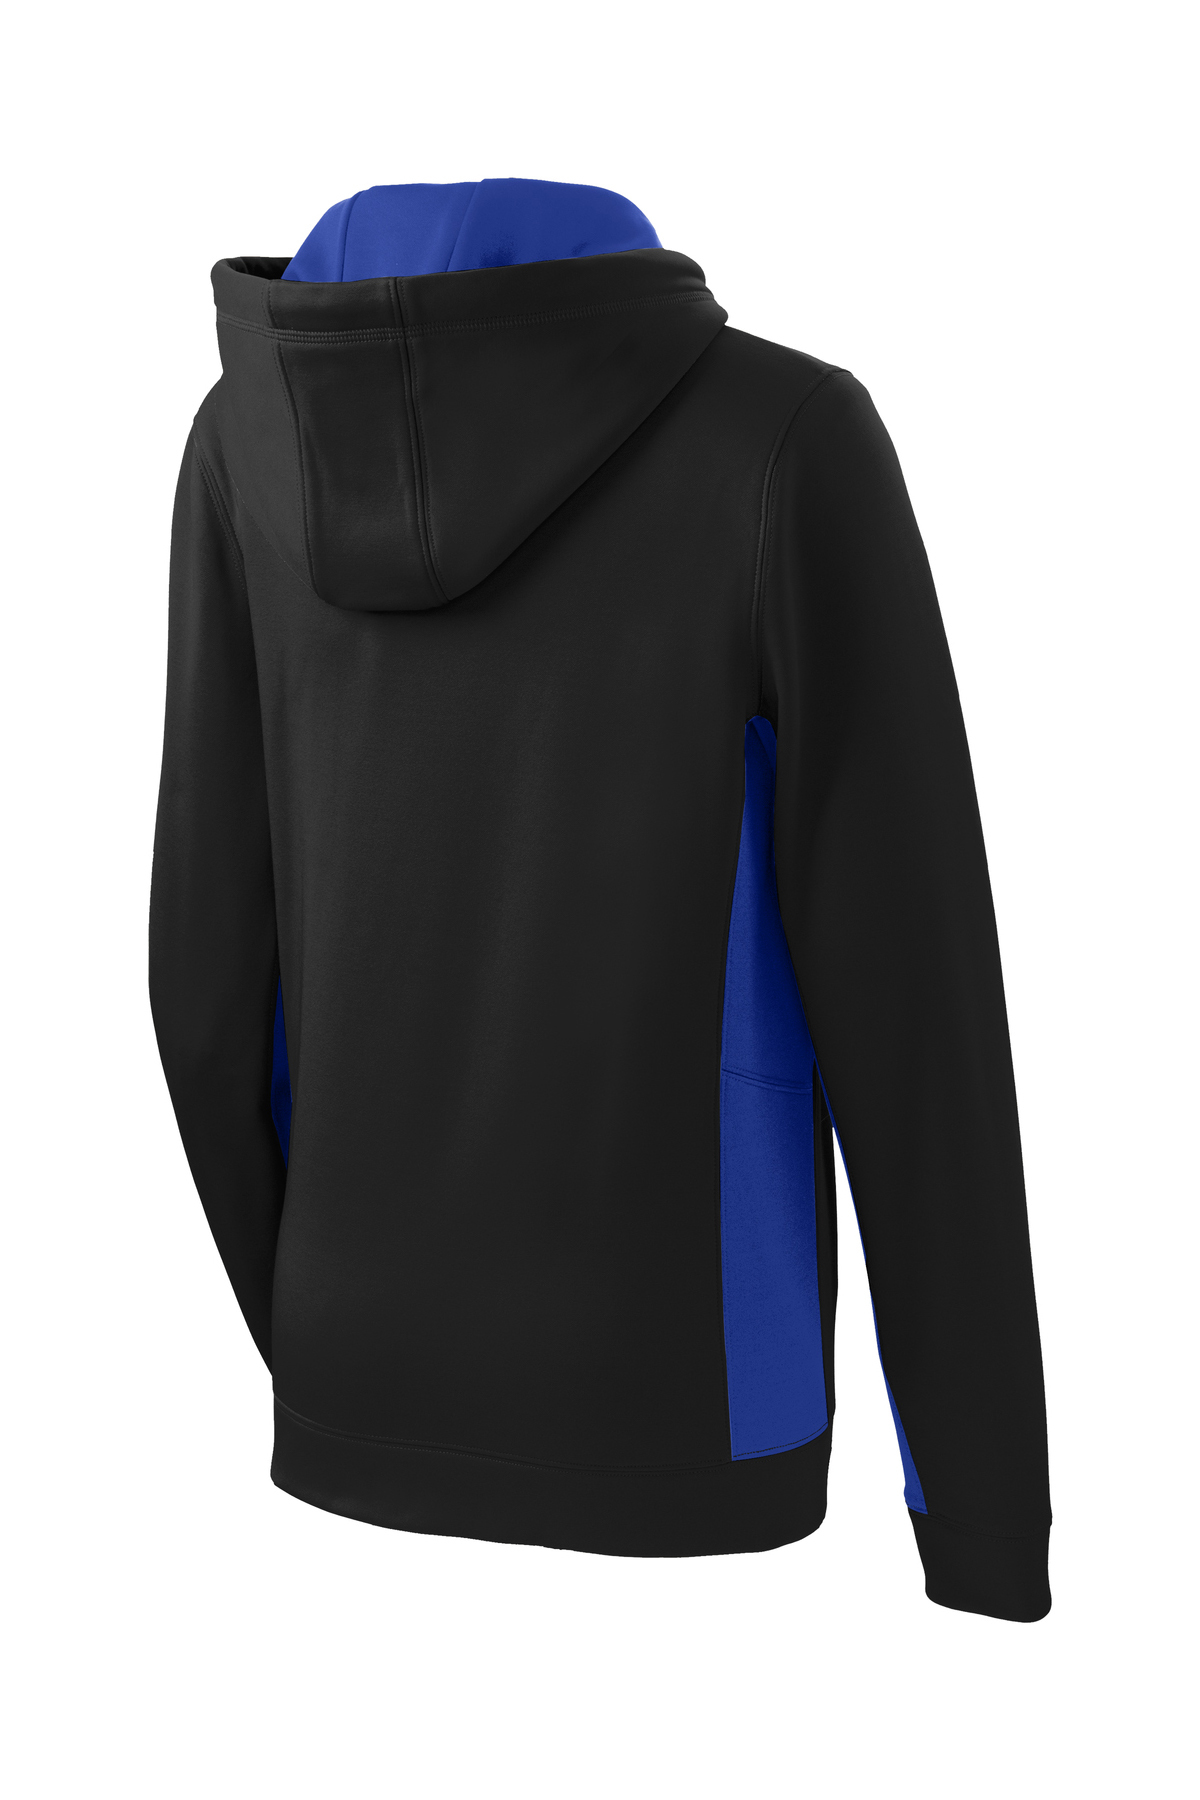 Sport-Tek Ladies Sport-Wick Fleece Colorblock Hooded Pullover | Product ...